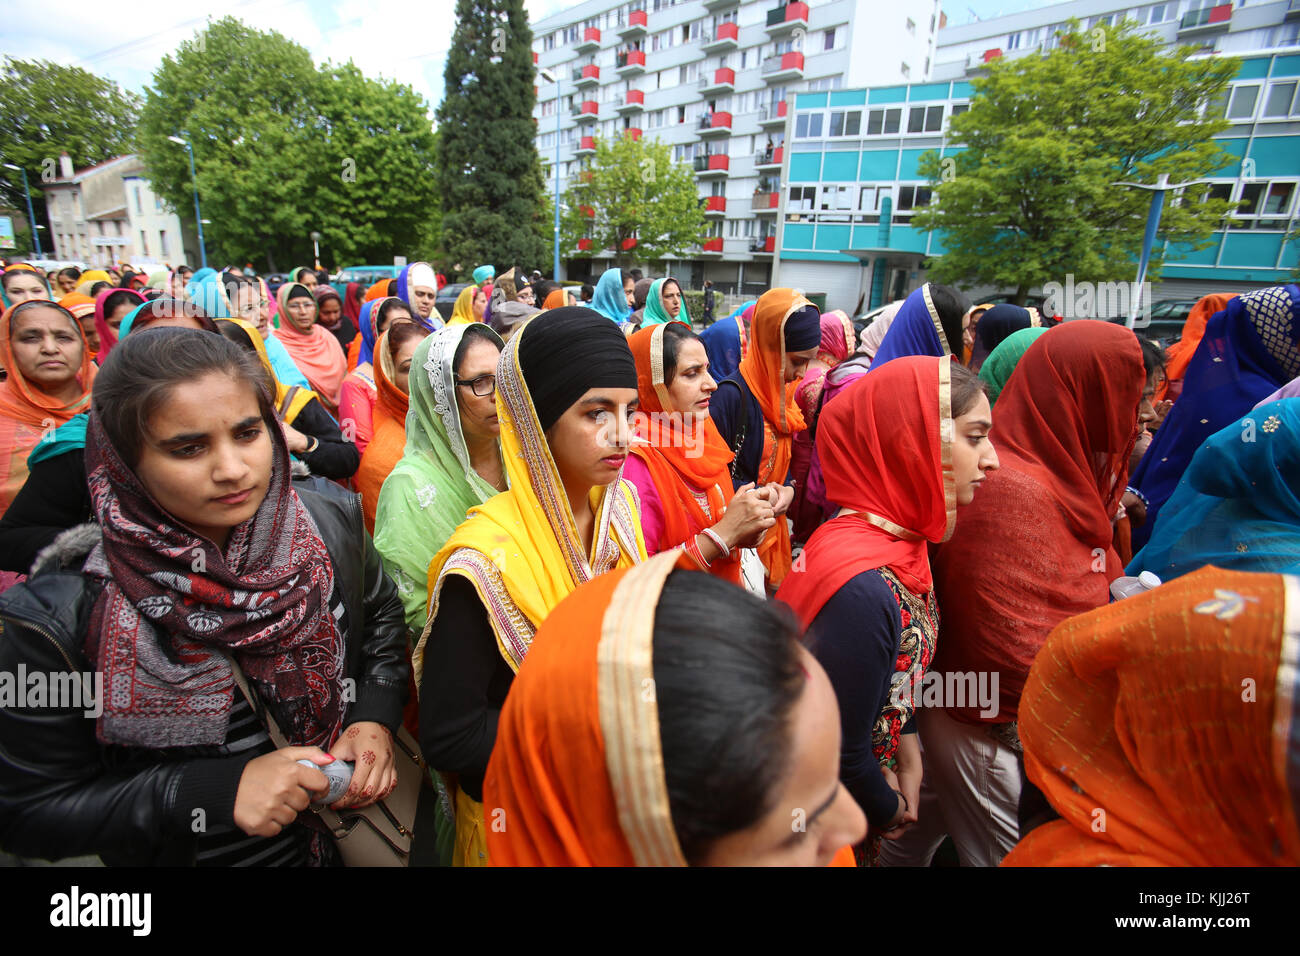 Sikhs celebrating Vaisakhi festival in Bobigny, France. Stock Photo